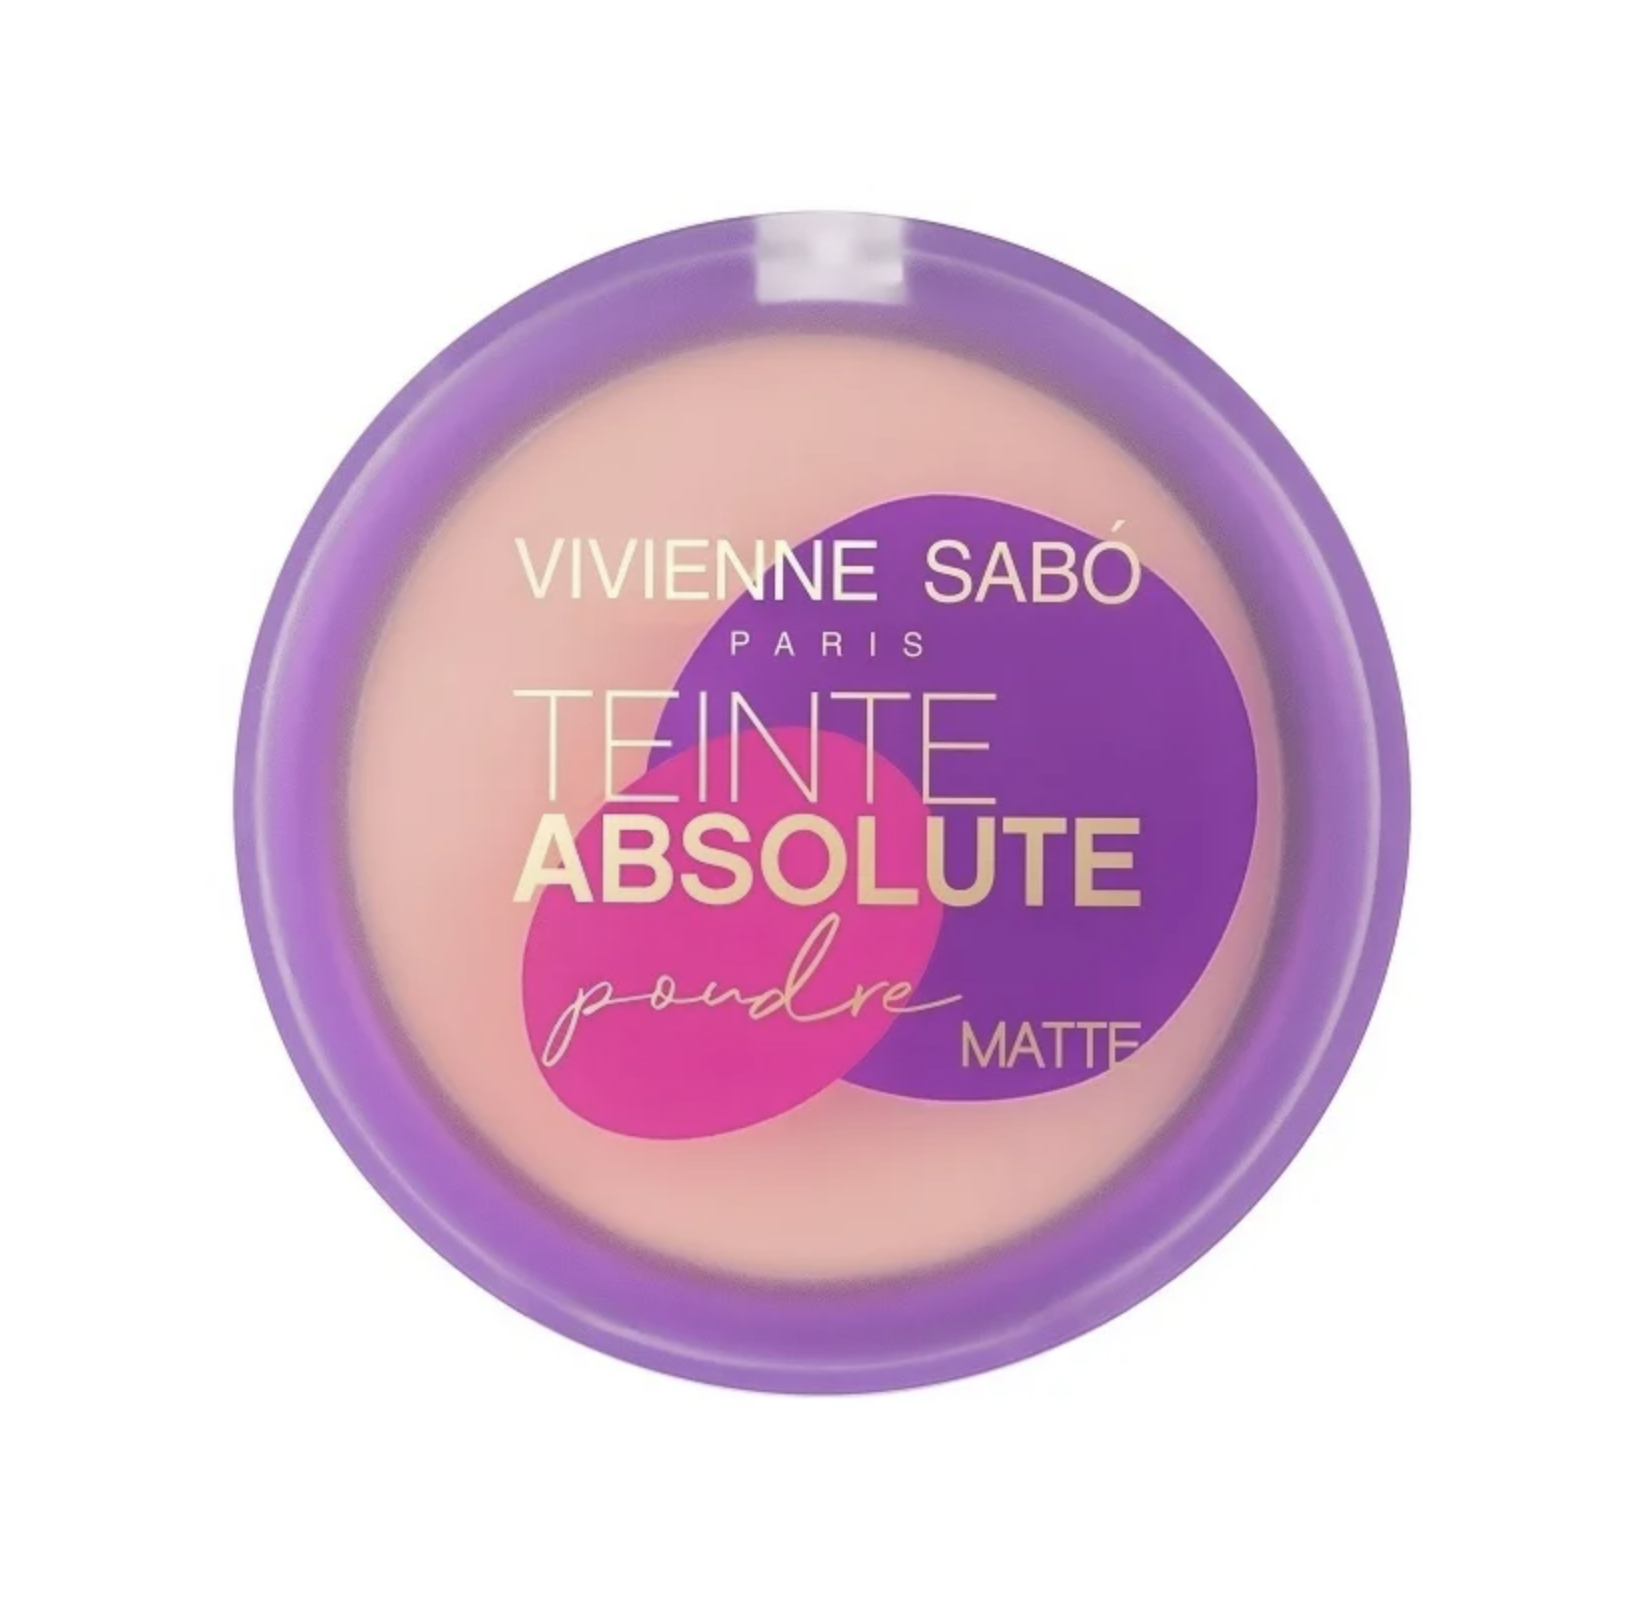    / Vivienne Sabo -     Teinte Absolute Poudre Matte  03, 6 